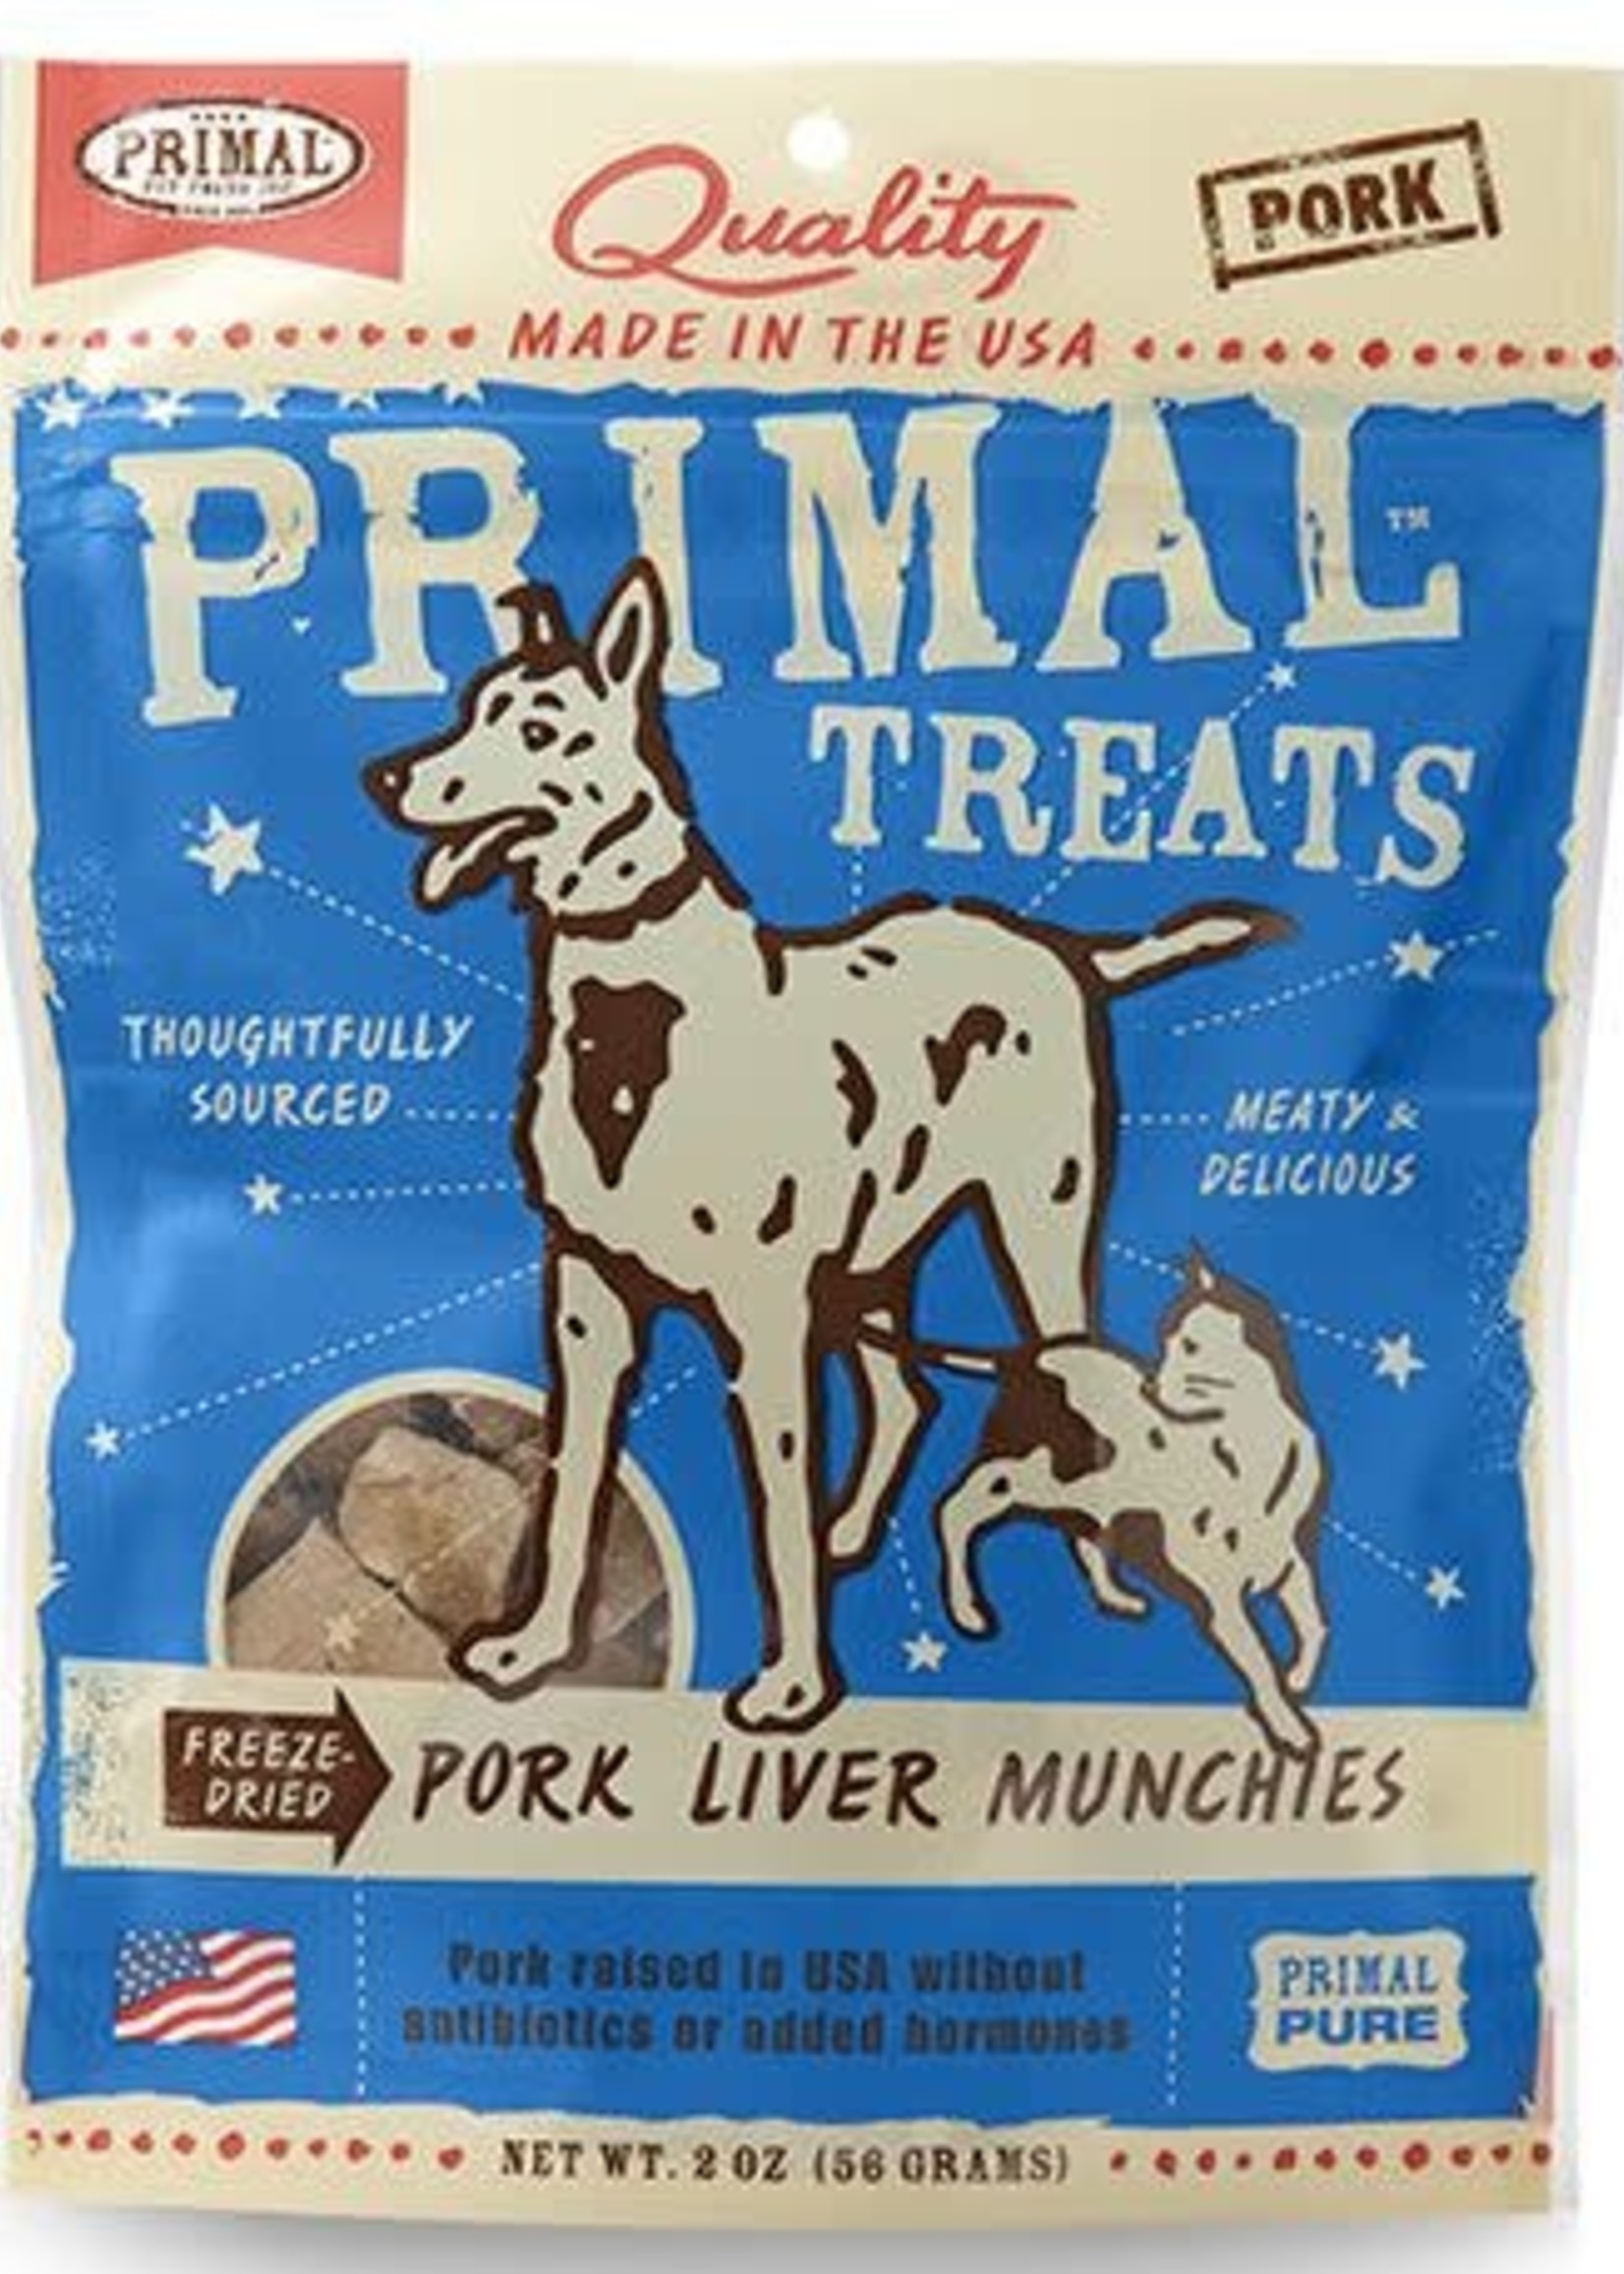 Primal Pet Foods Inc Primal Pork Liver Munchies 2oz